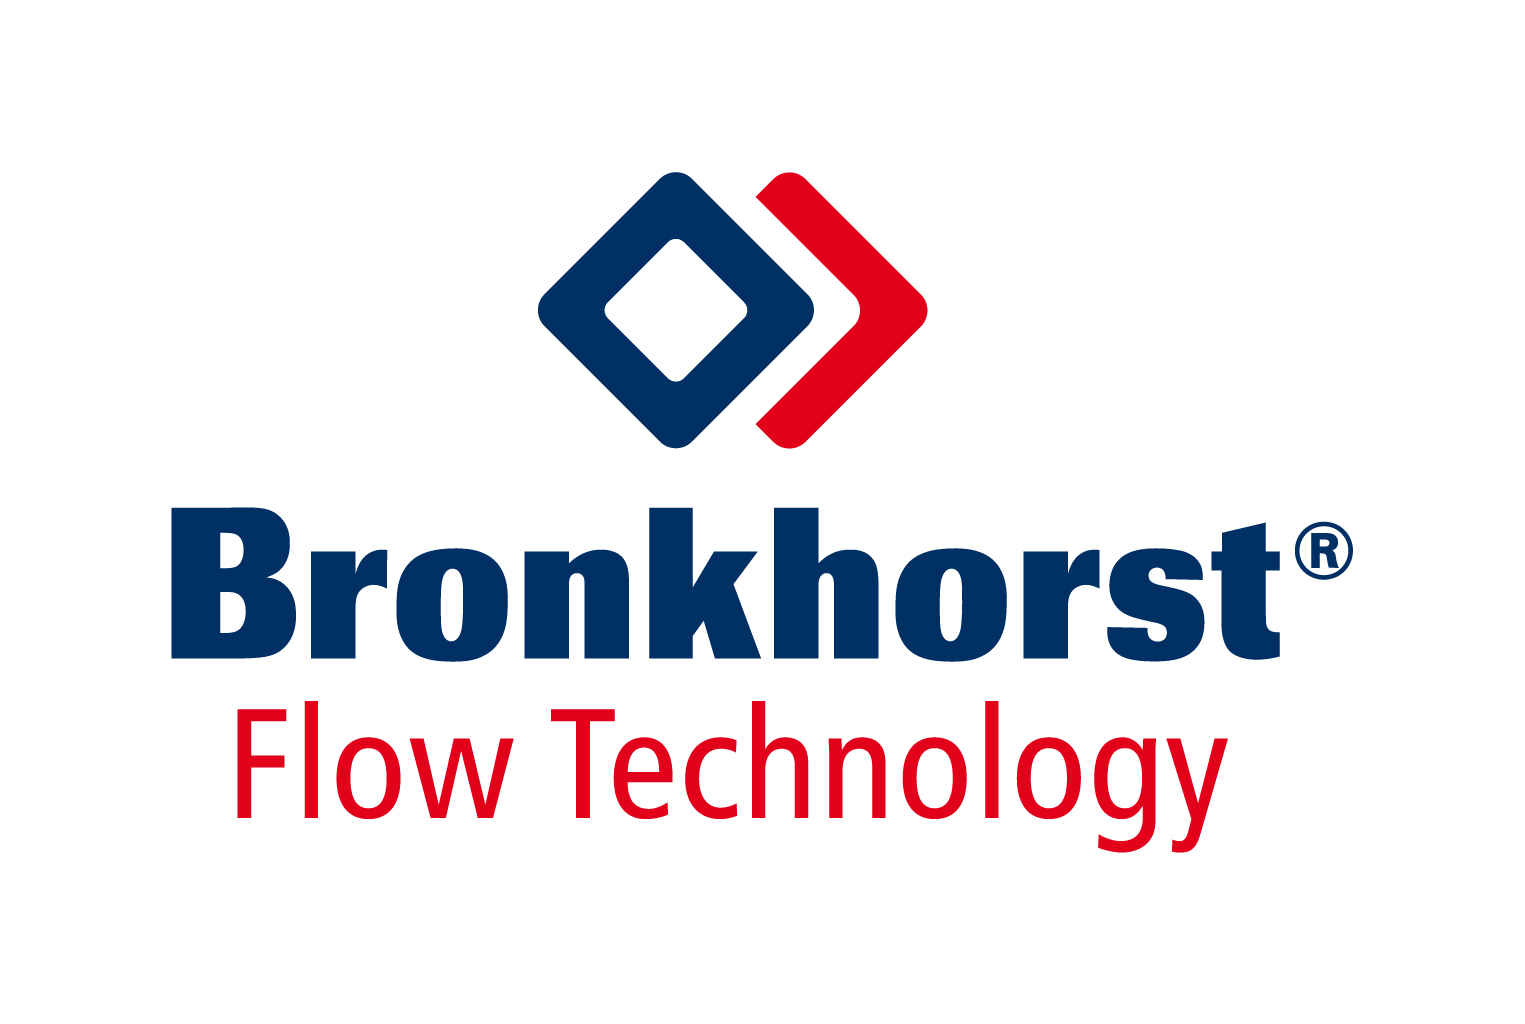 Bronkhorst Future Technology